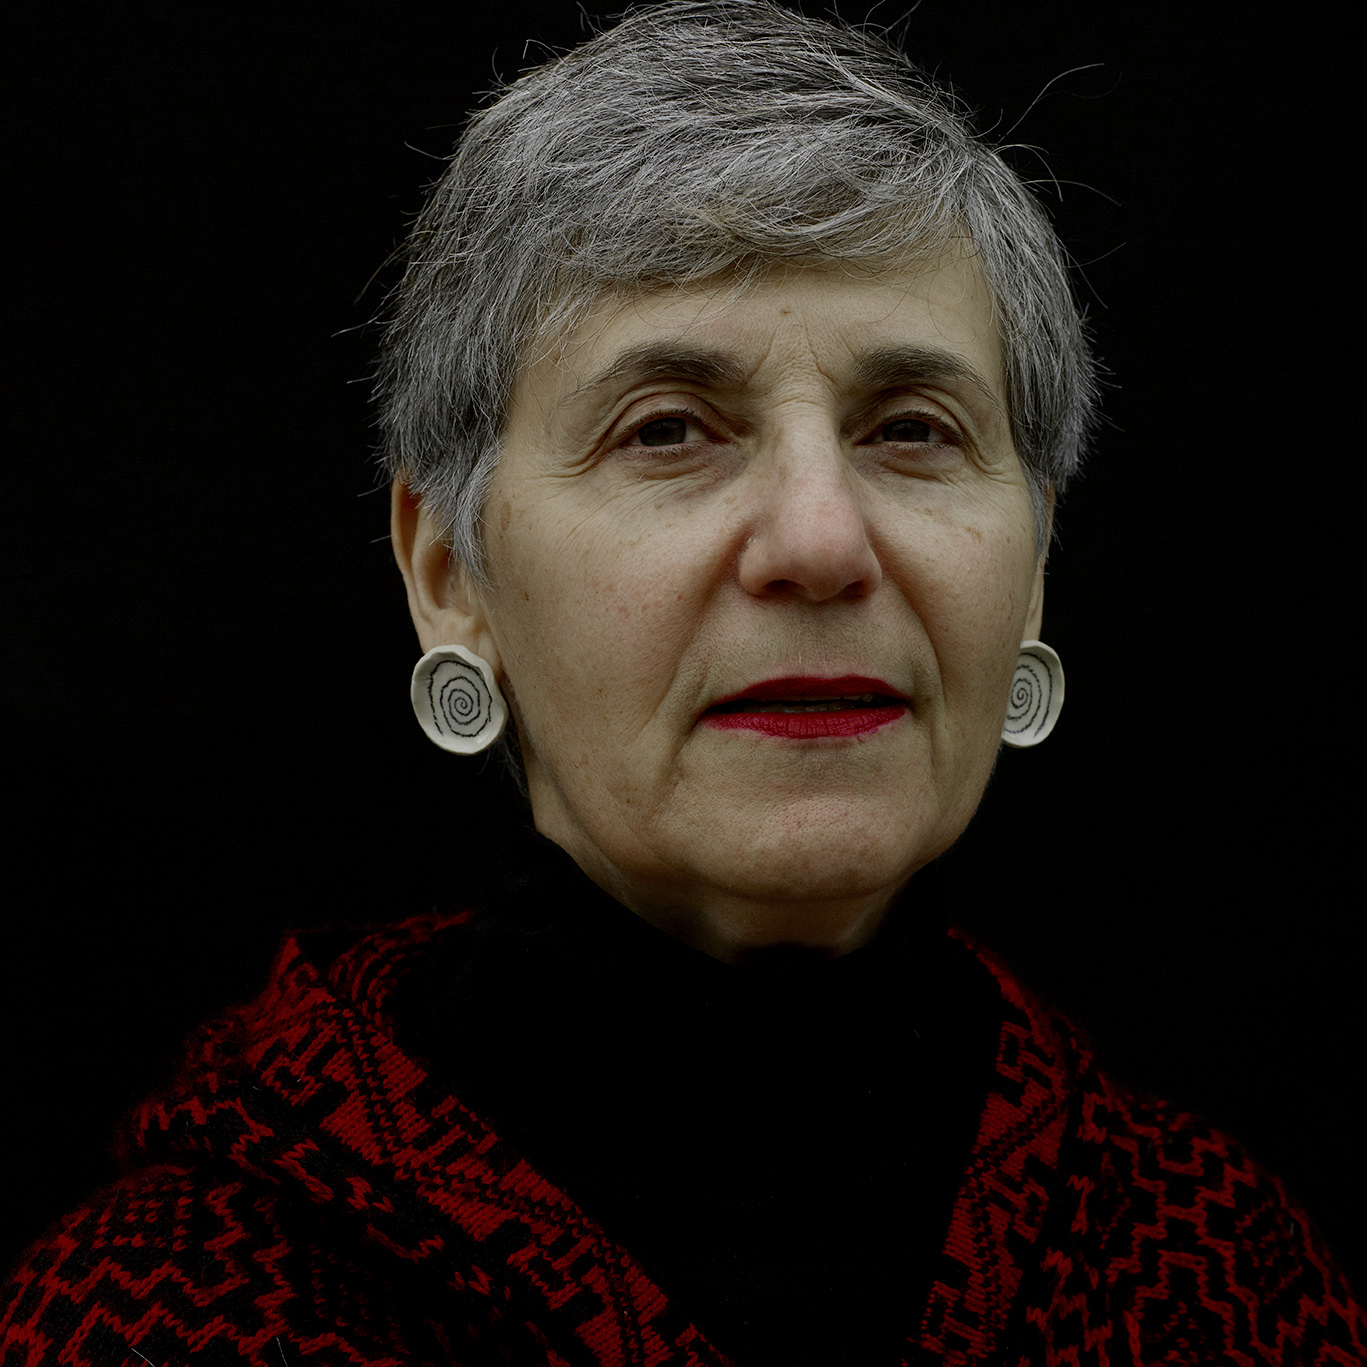 Monica Rosenthal